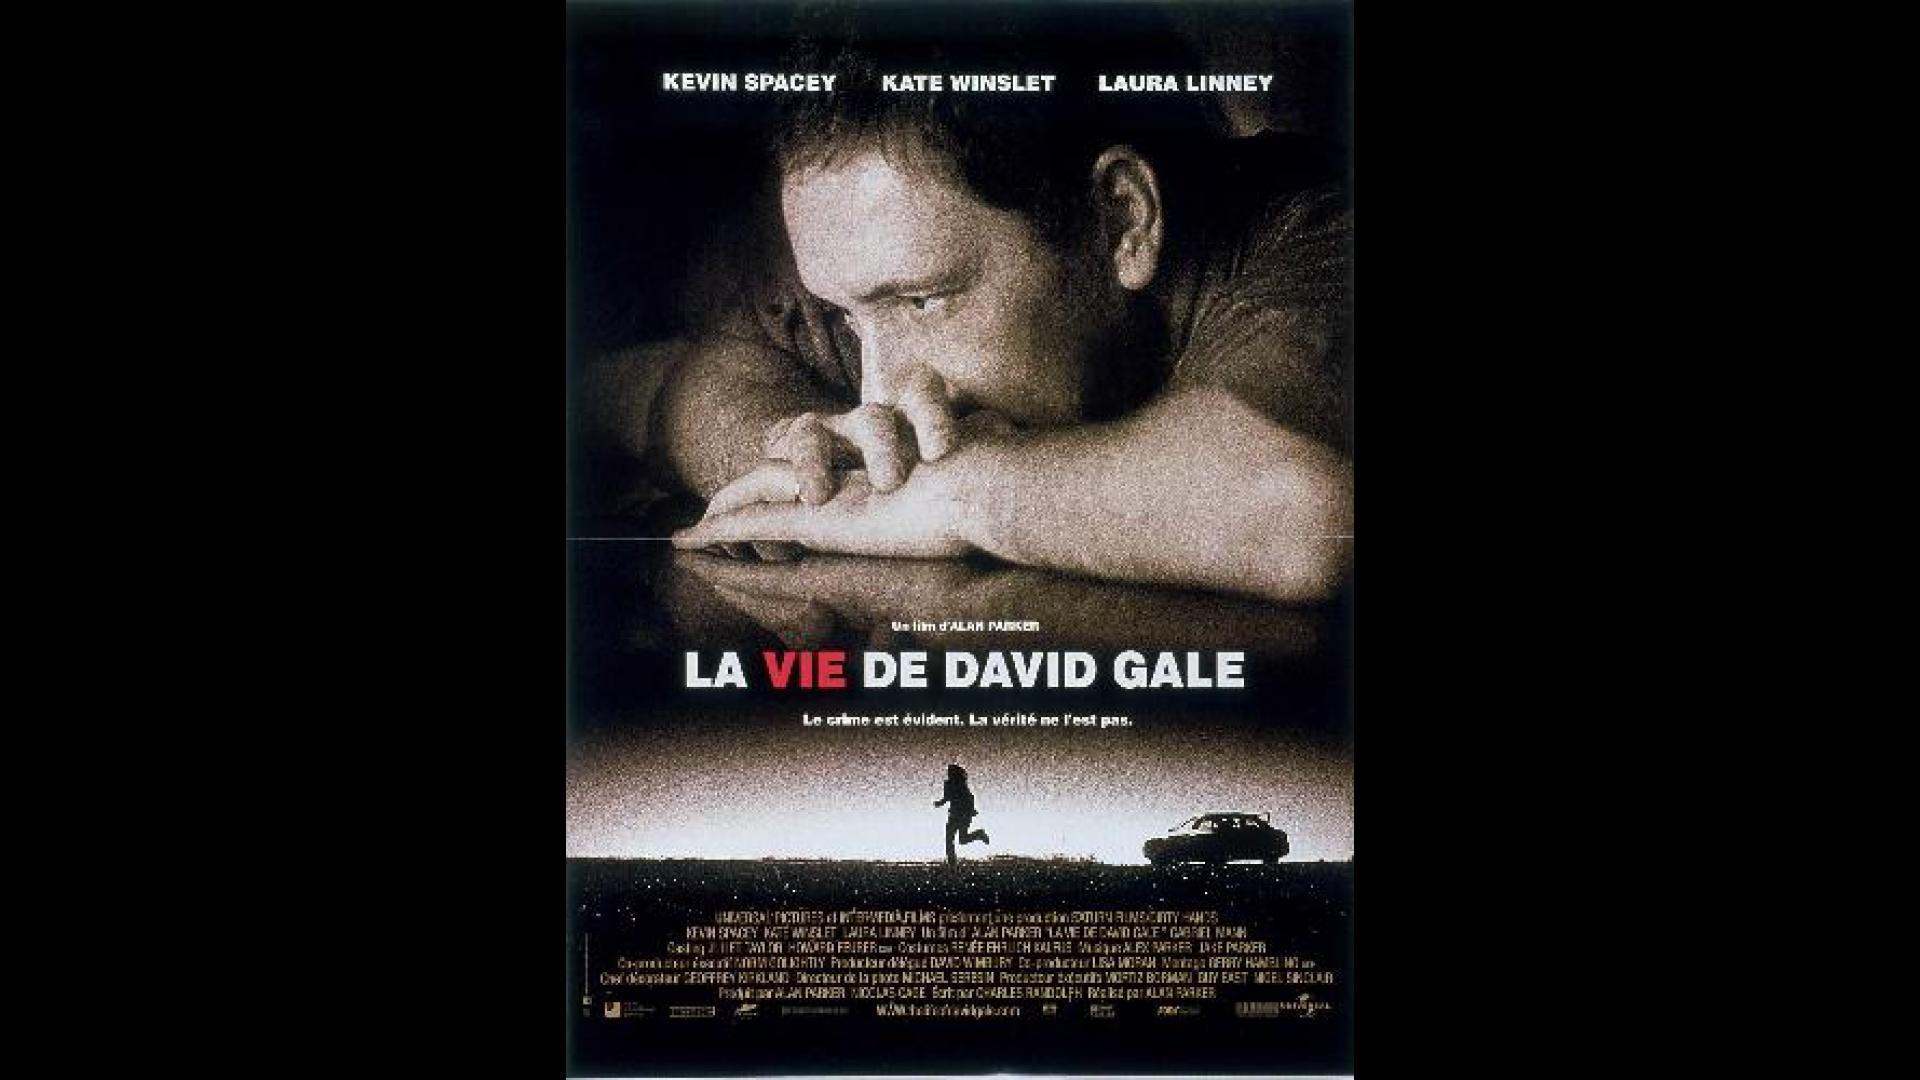 Bo La Vie De David Gale La Vie De David Gale (2003), un film de Alan Parker| Premiere.fr | news